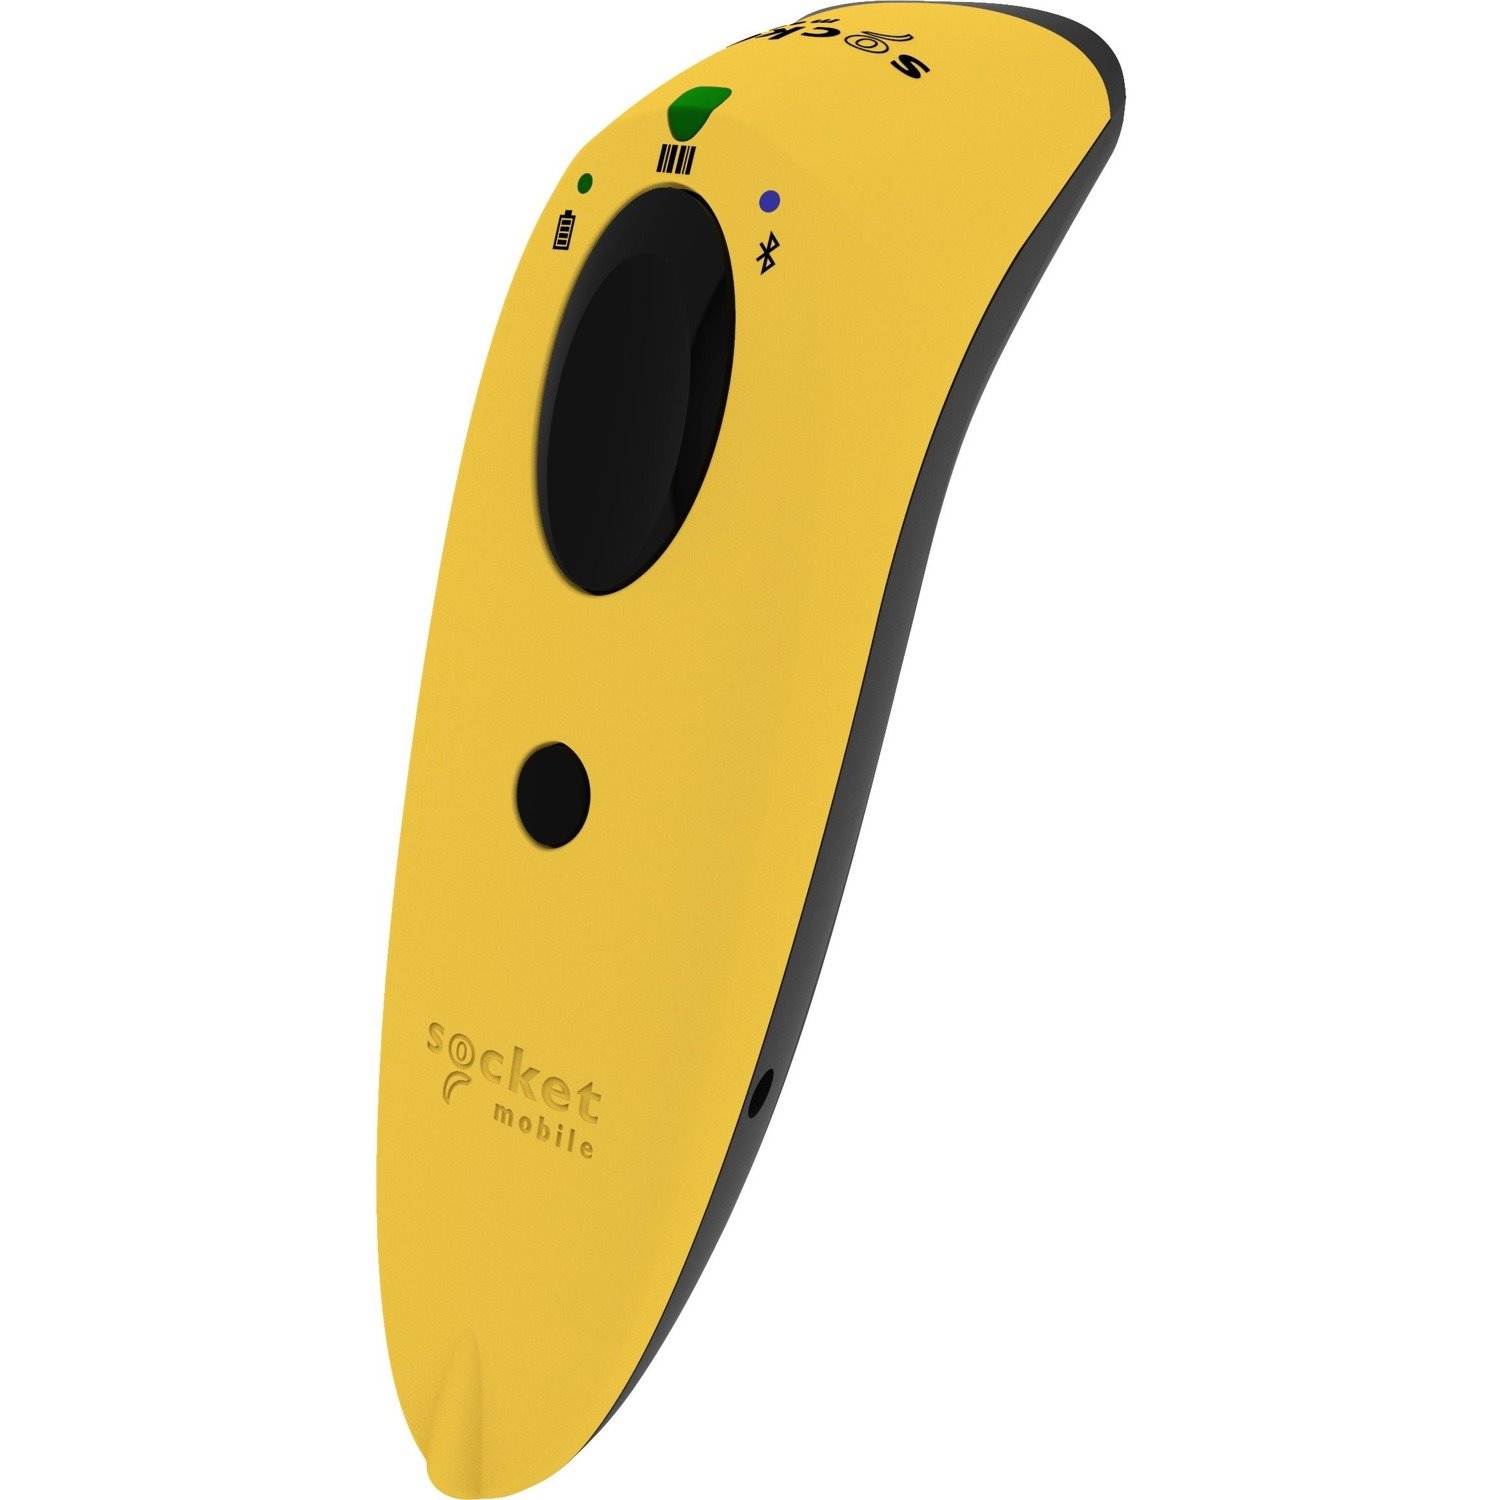 Socket Mobile SocketScan S720, Linear Barcode Plus QR Code Reader, Yellow